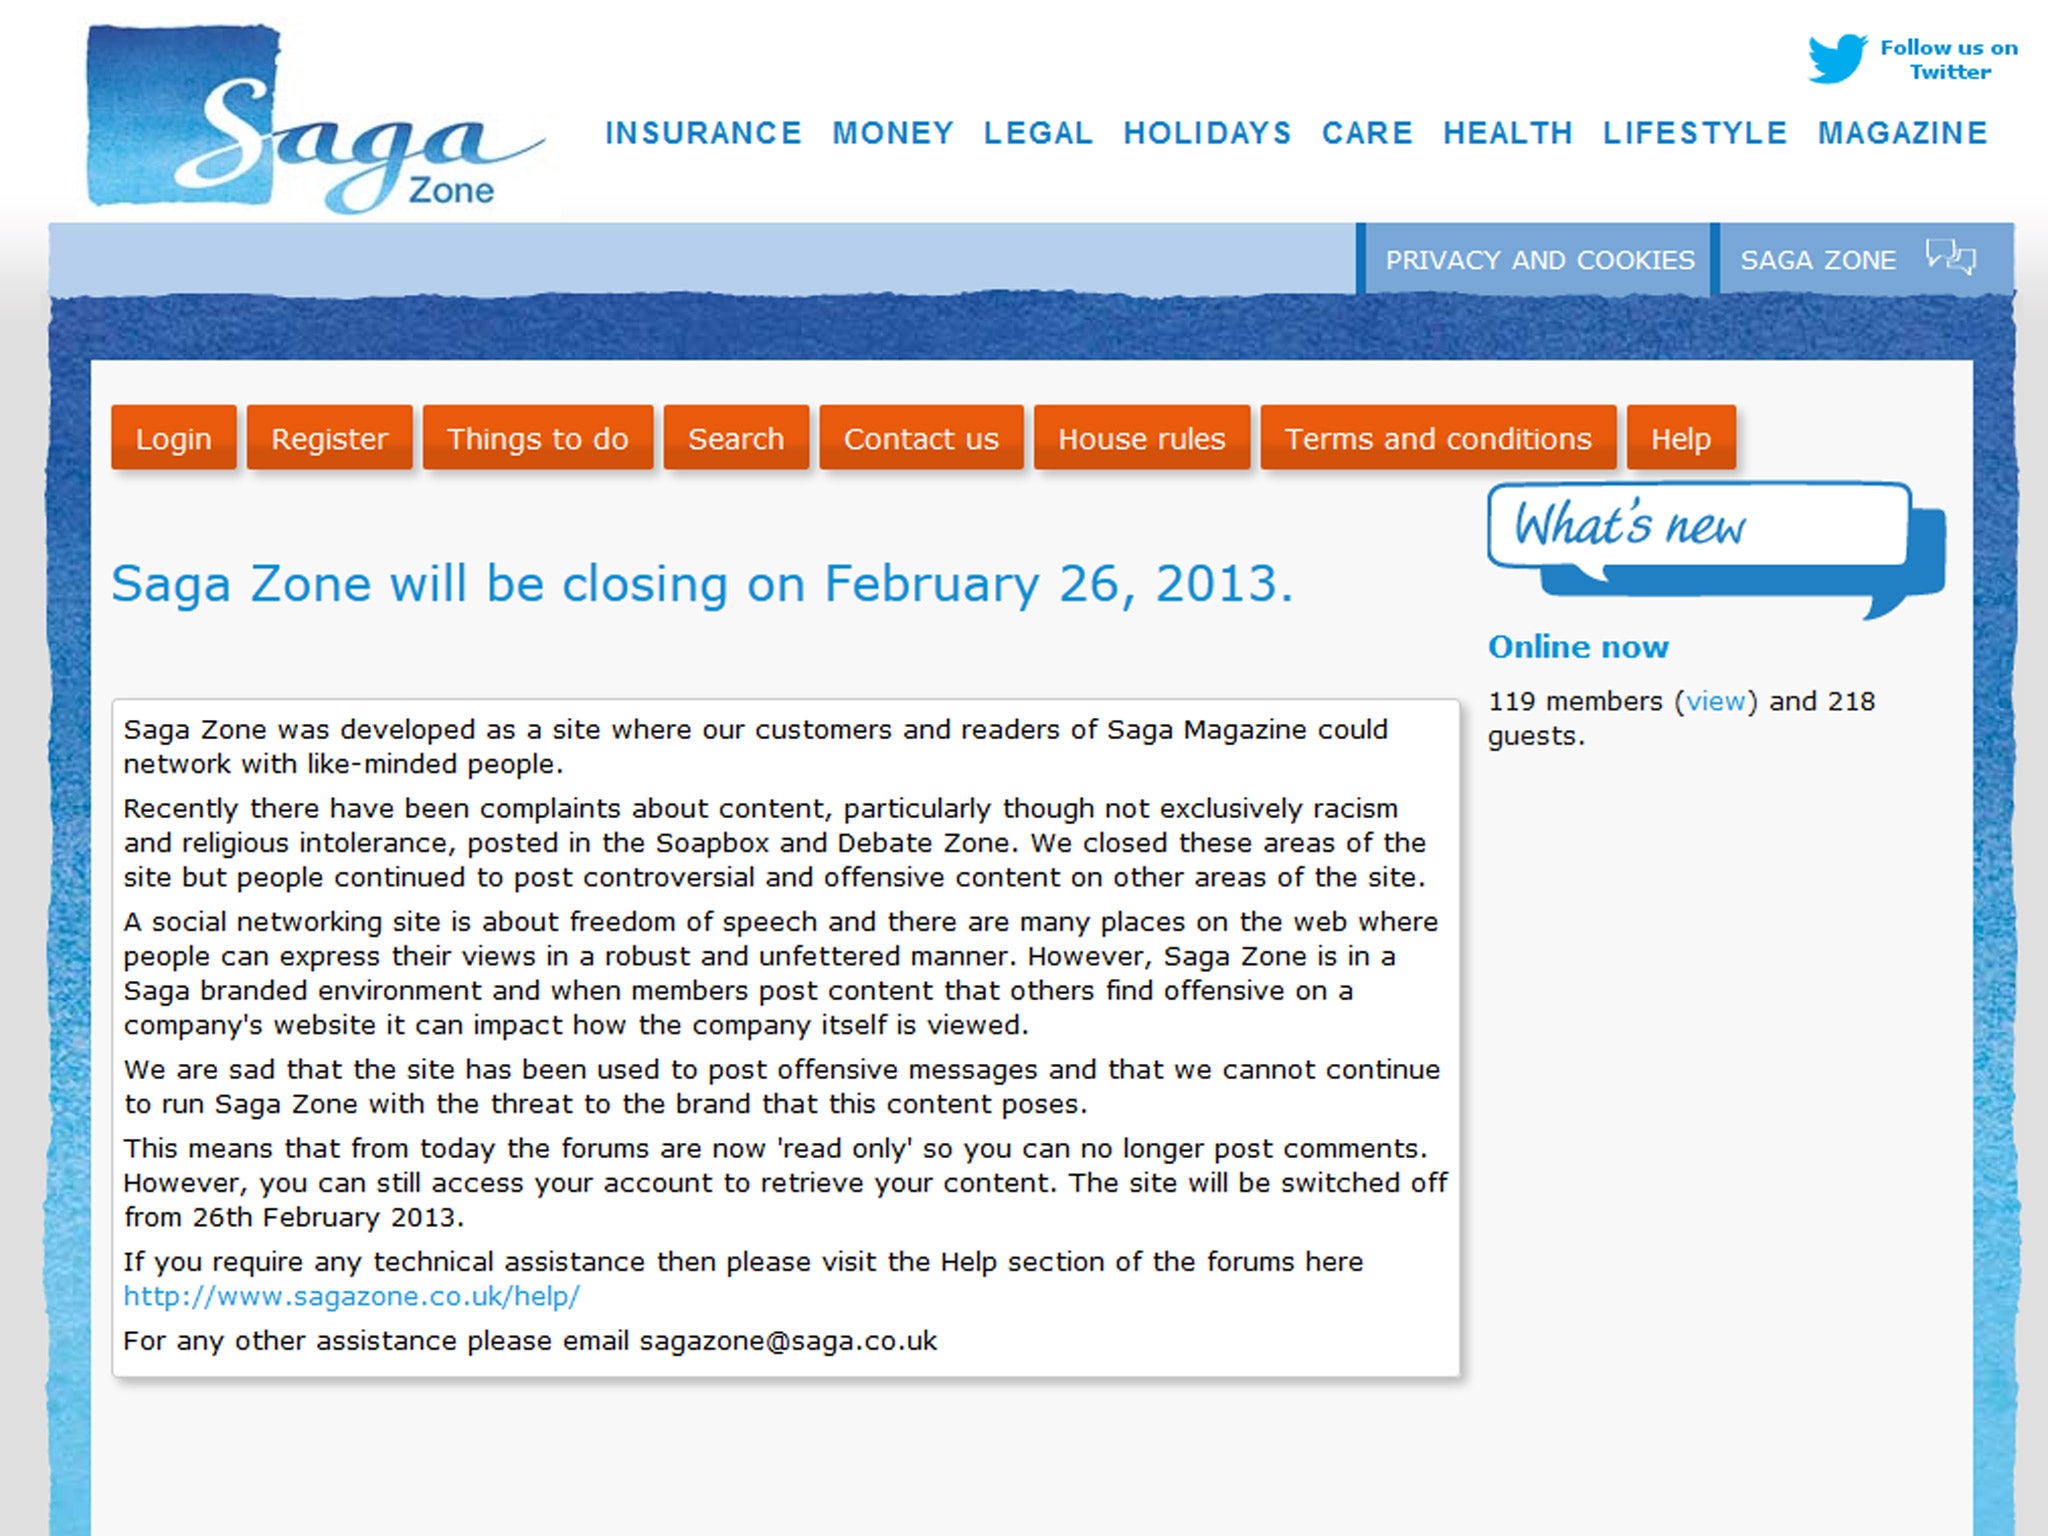 The Saga Zone website today